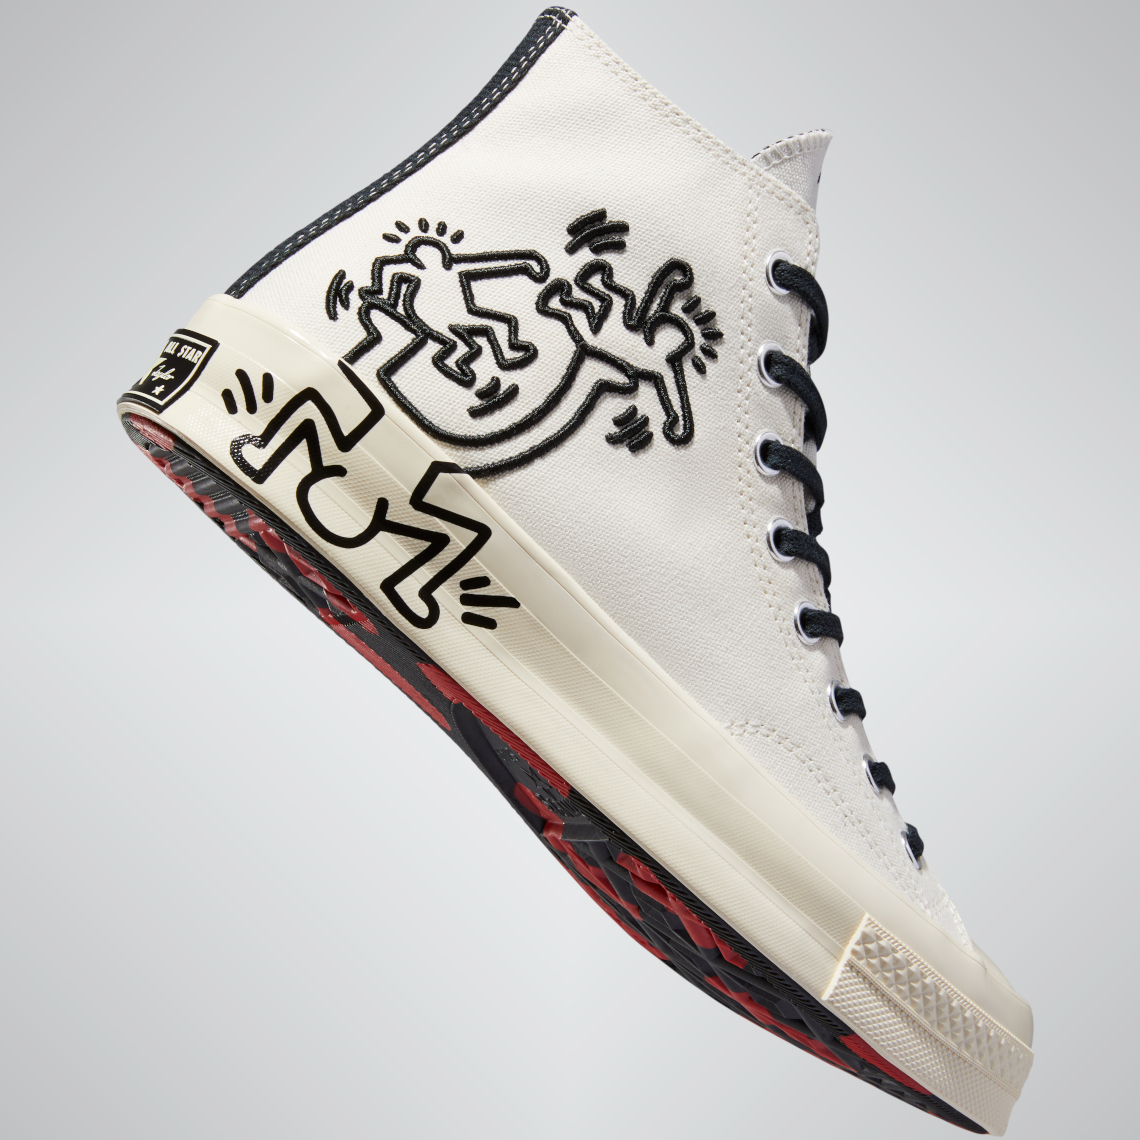 Keith Haring x Converse Chuck 70